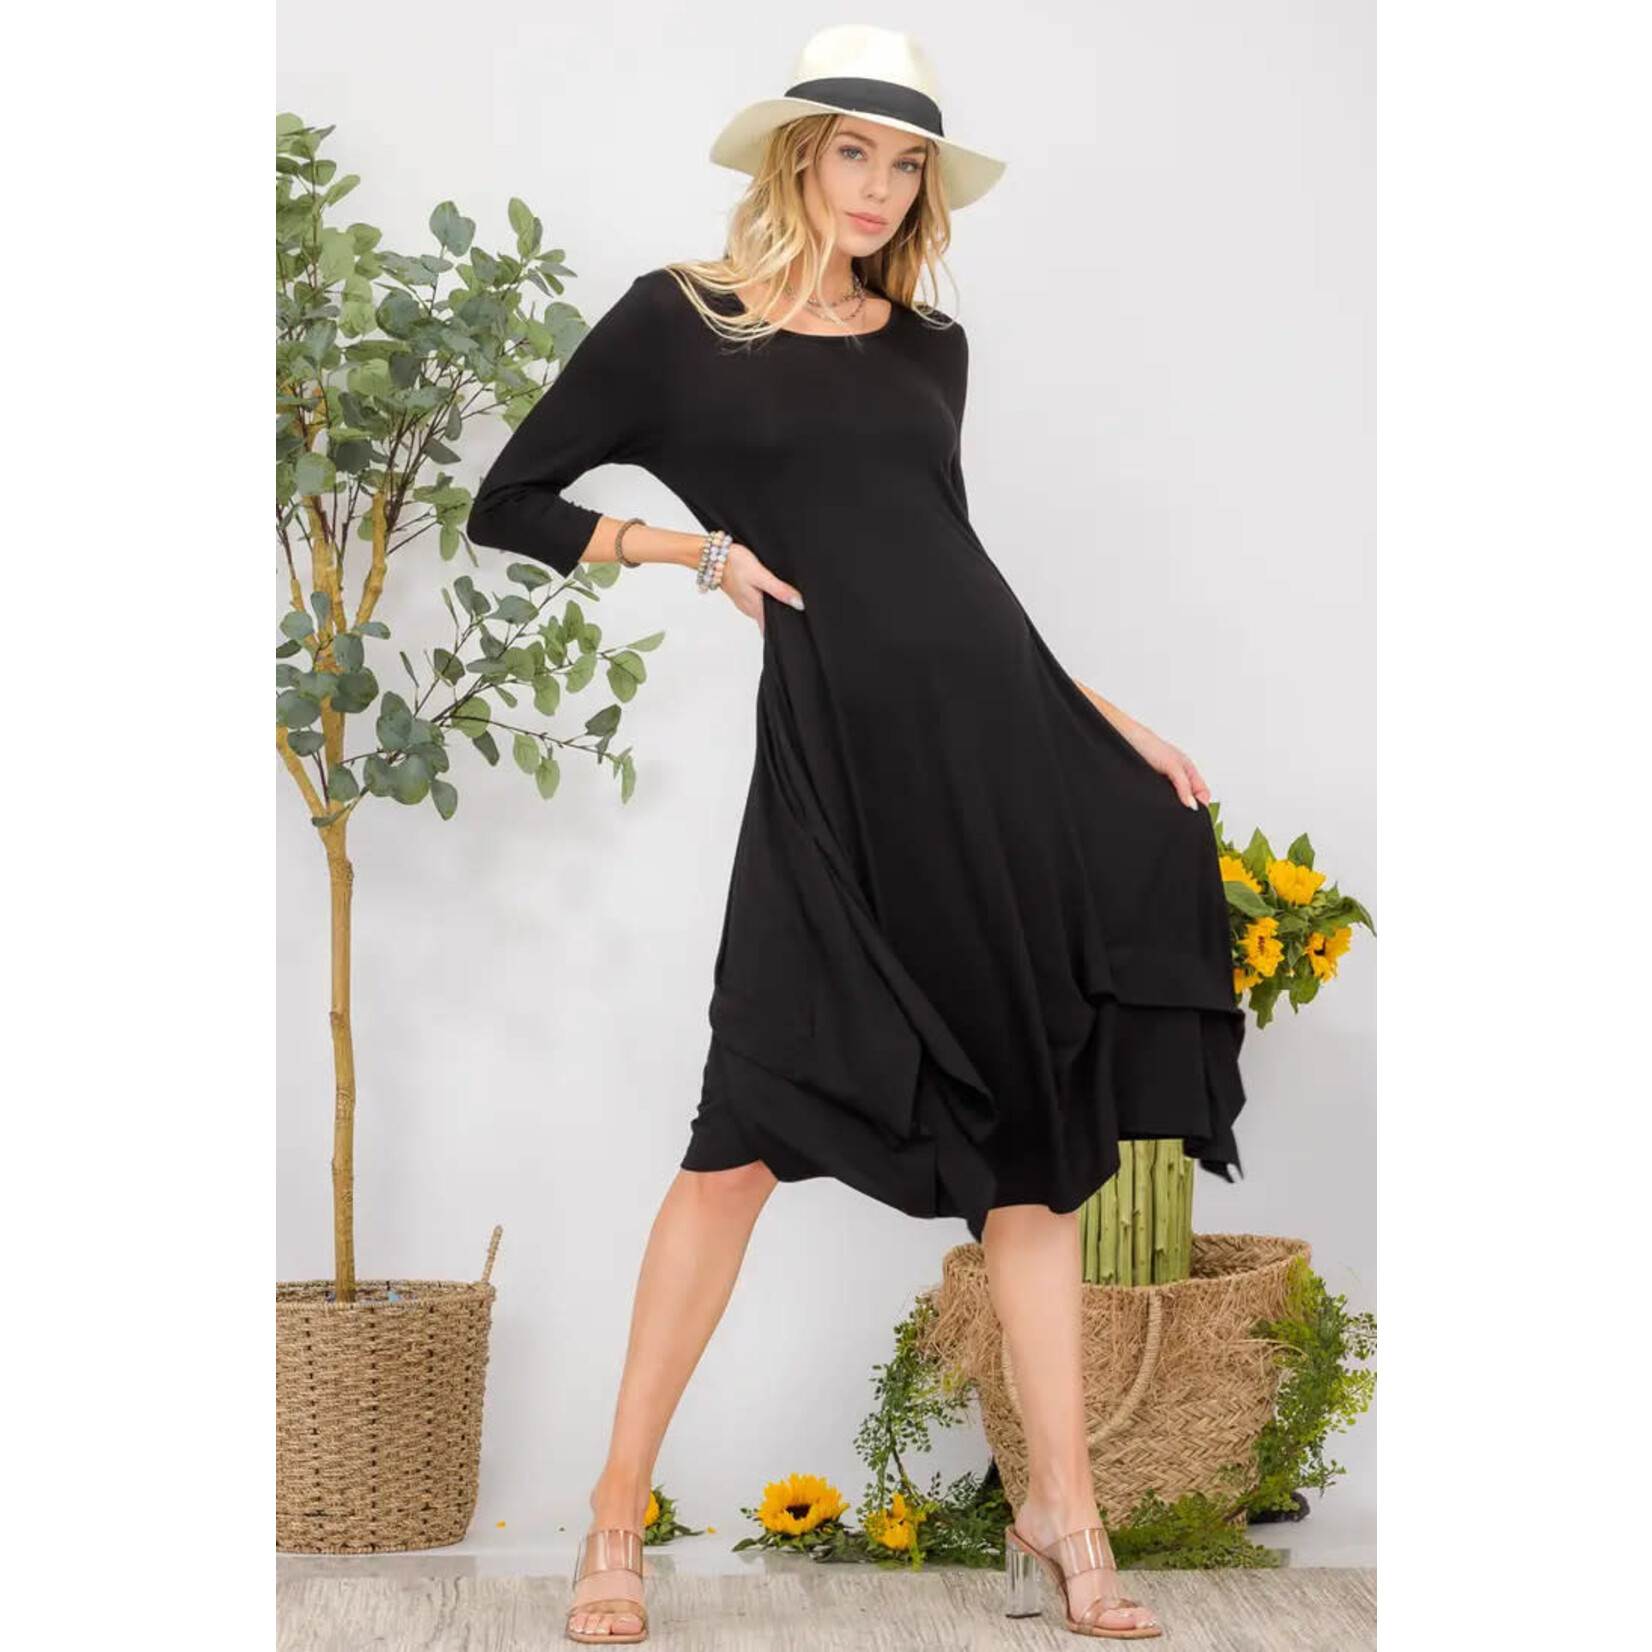 Celeste Clothing 1/2 Sleeve Midi Dress